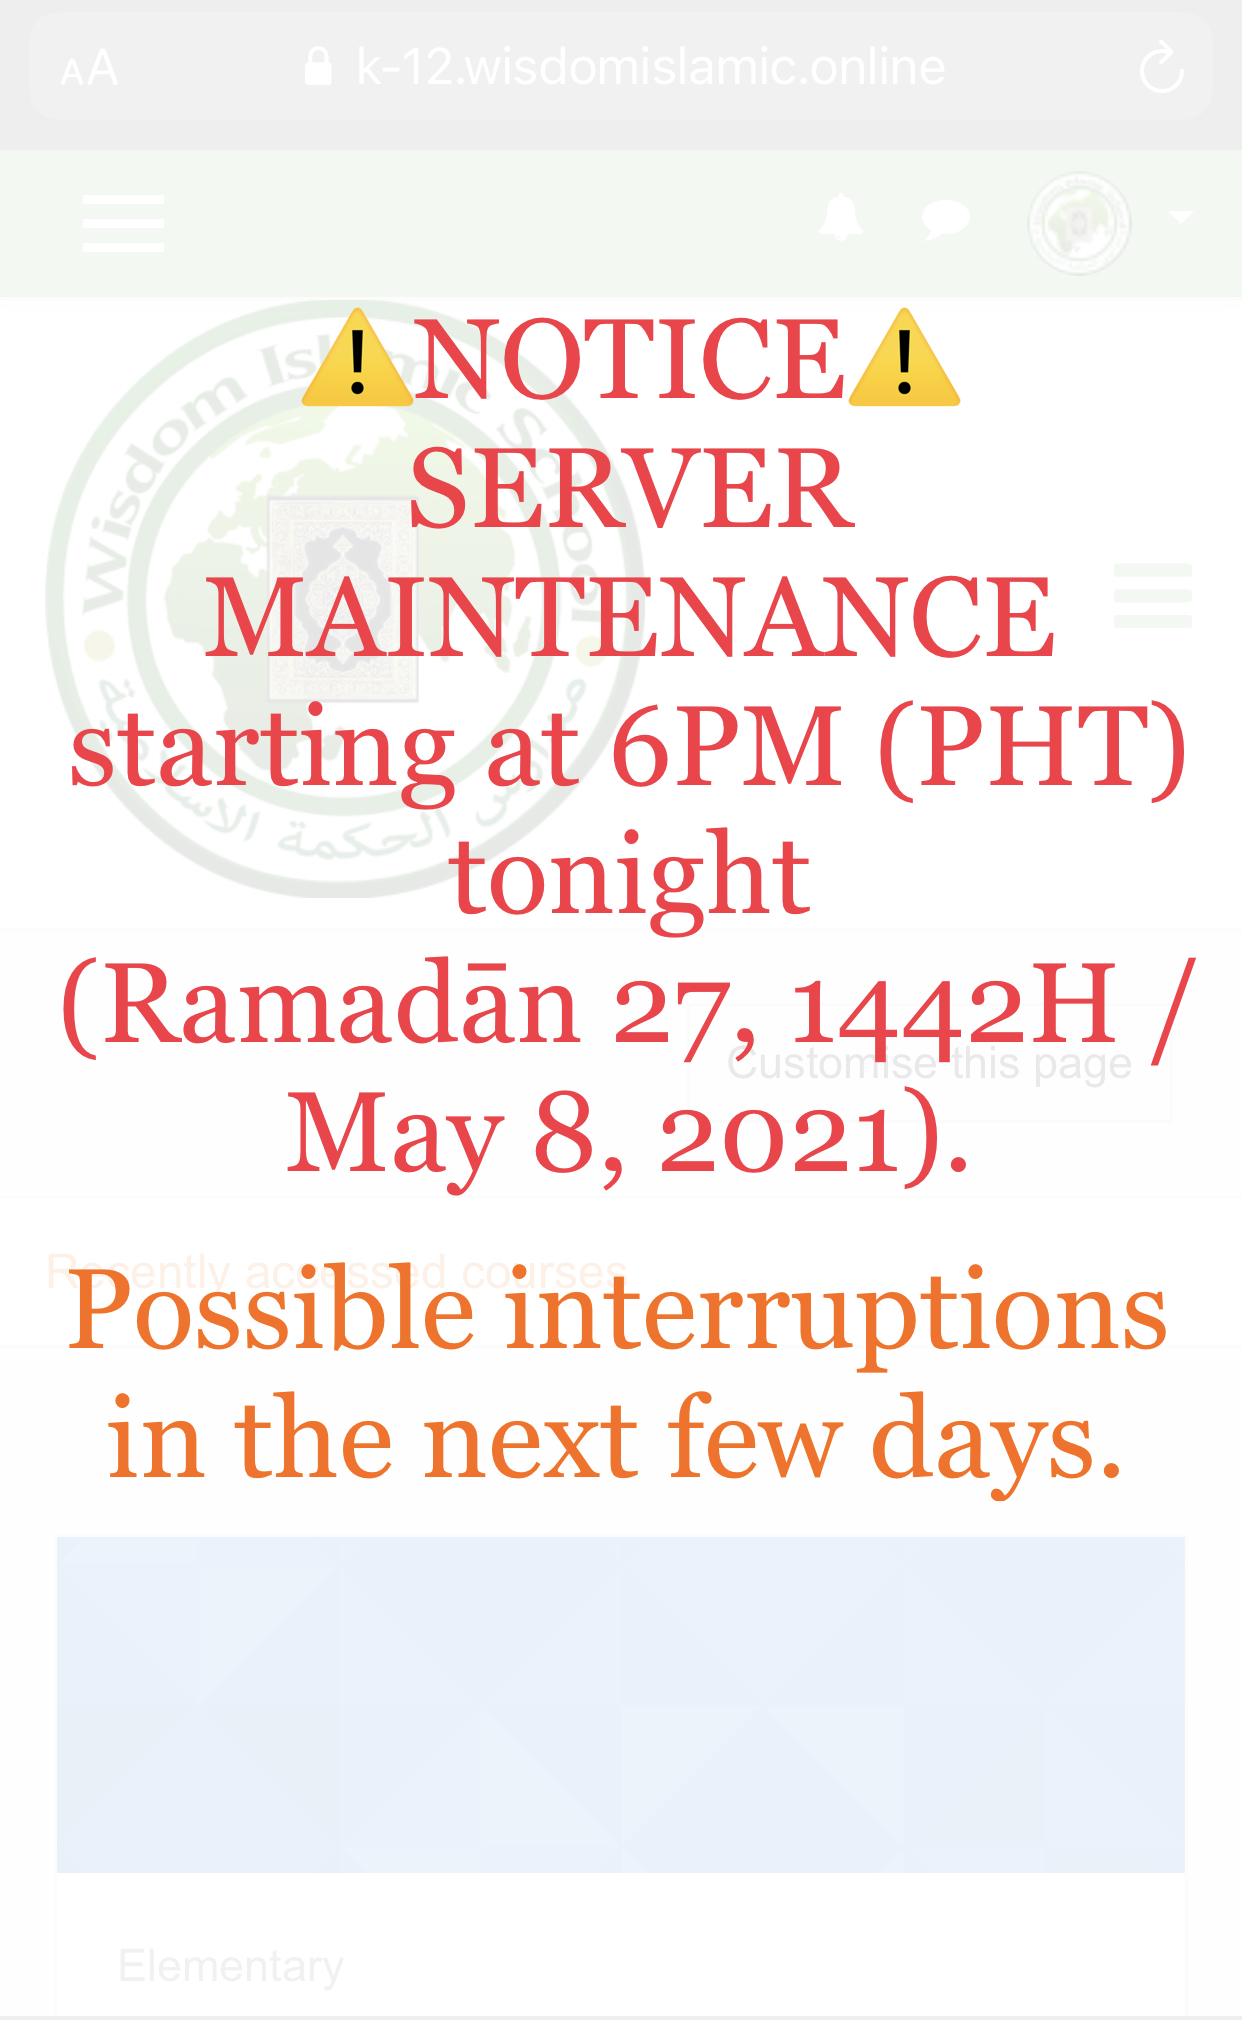 Server maintenance at 6PM tonight (Ramadān 27, 1442H / May 8, 2021).    Possible interruptions during the Server Maintenance.